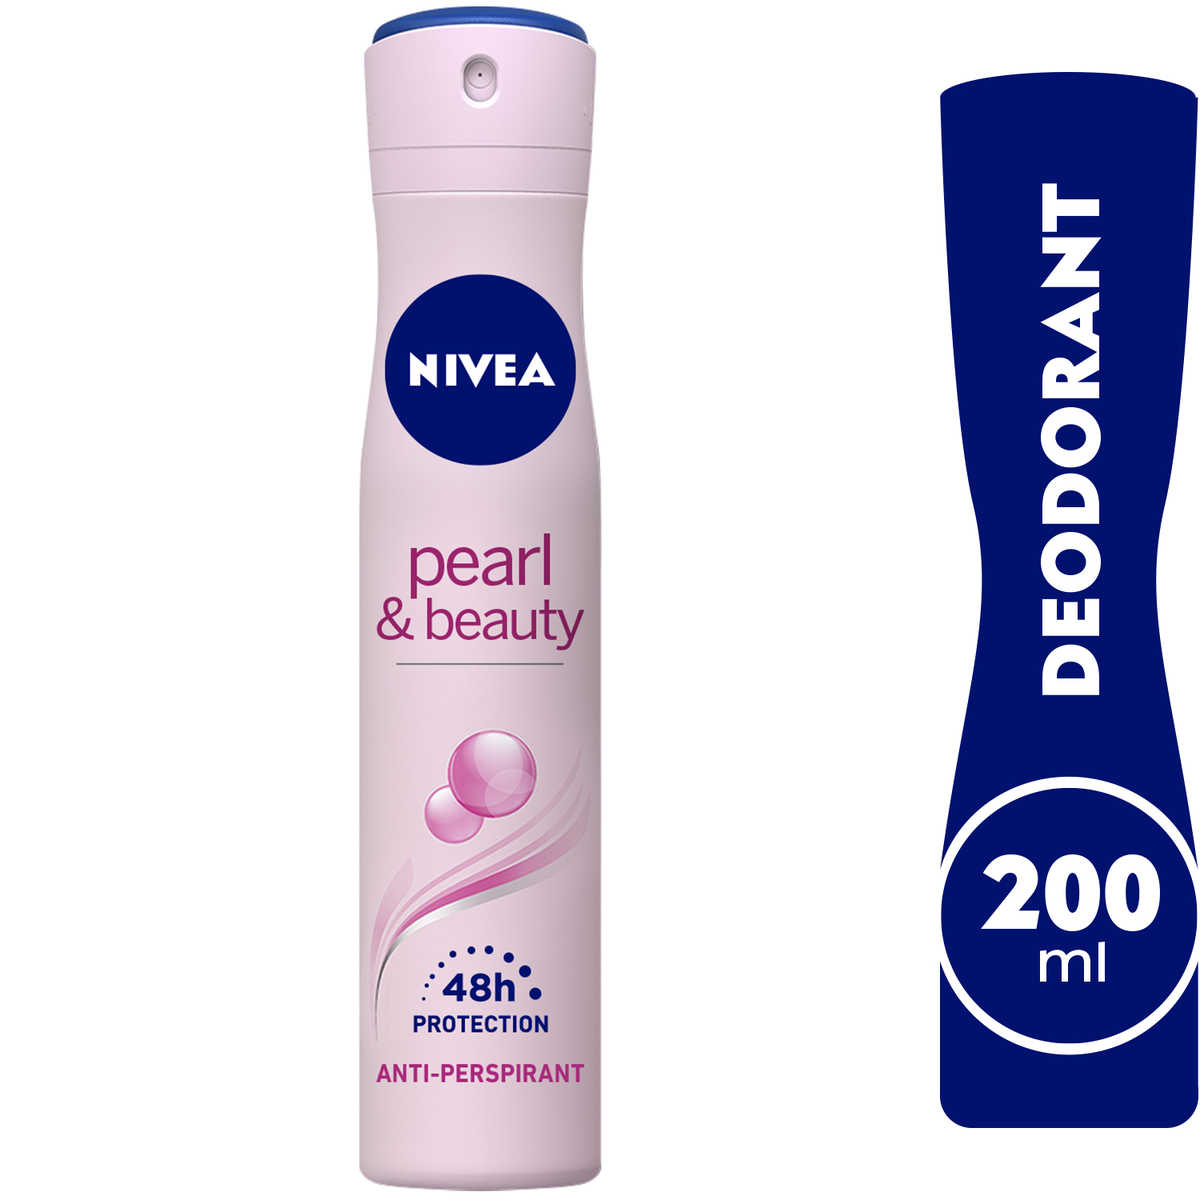 Nivea Deodorant Pearl & Beauty With Pearl Extract 200 ml